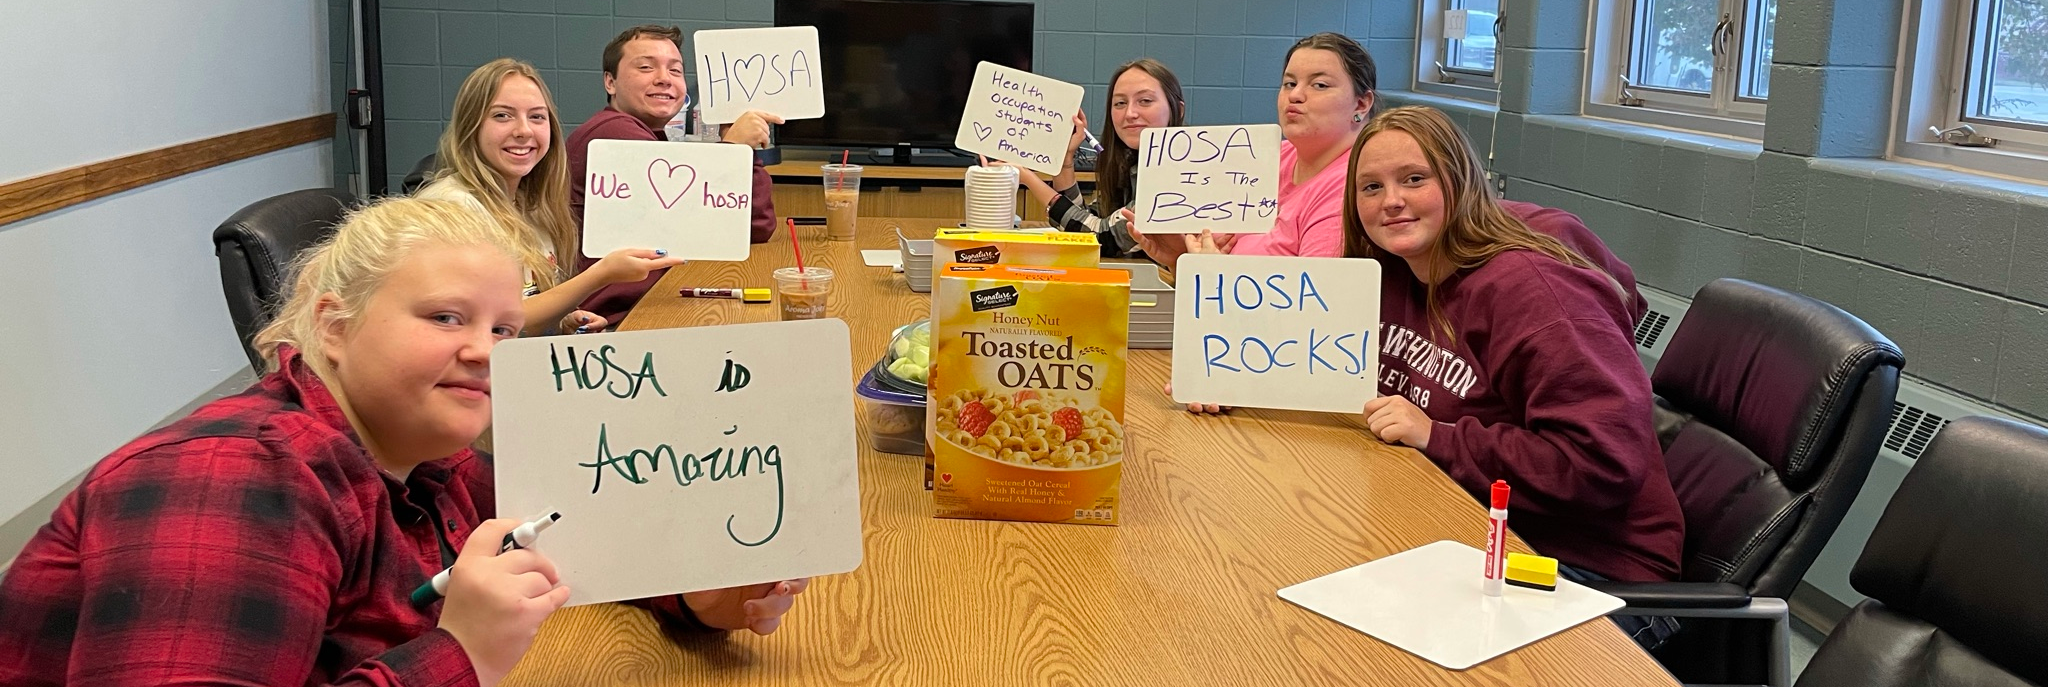 Health students  hold signs praising HOSA